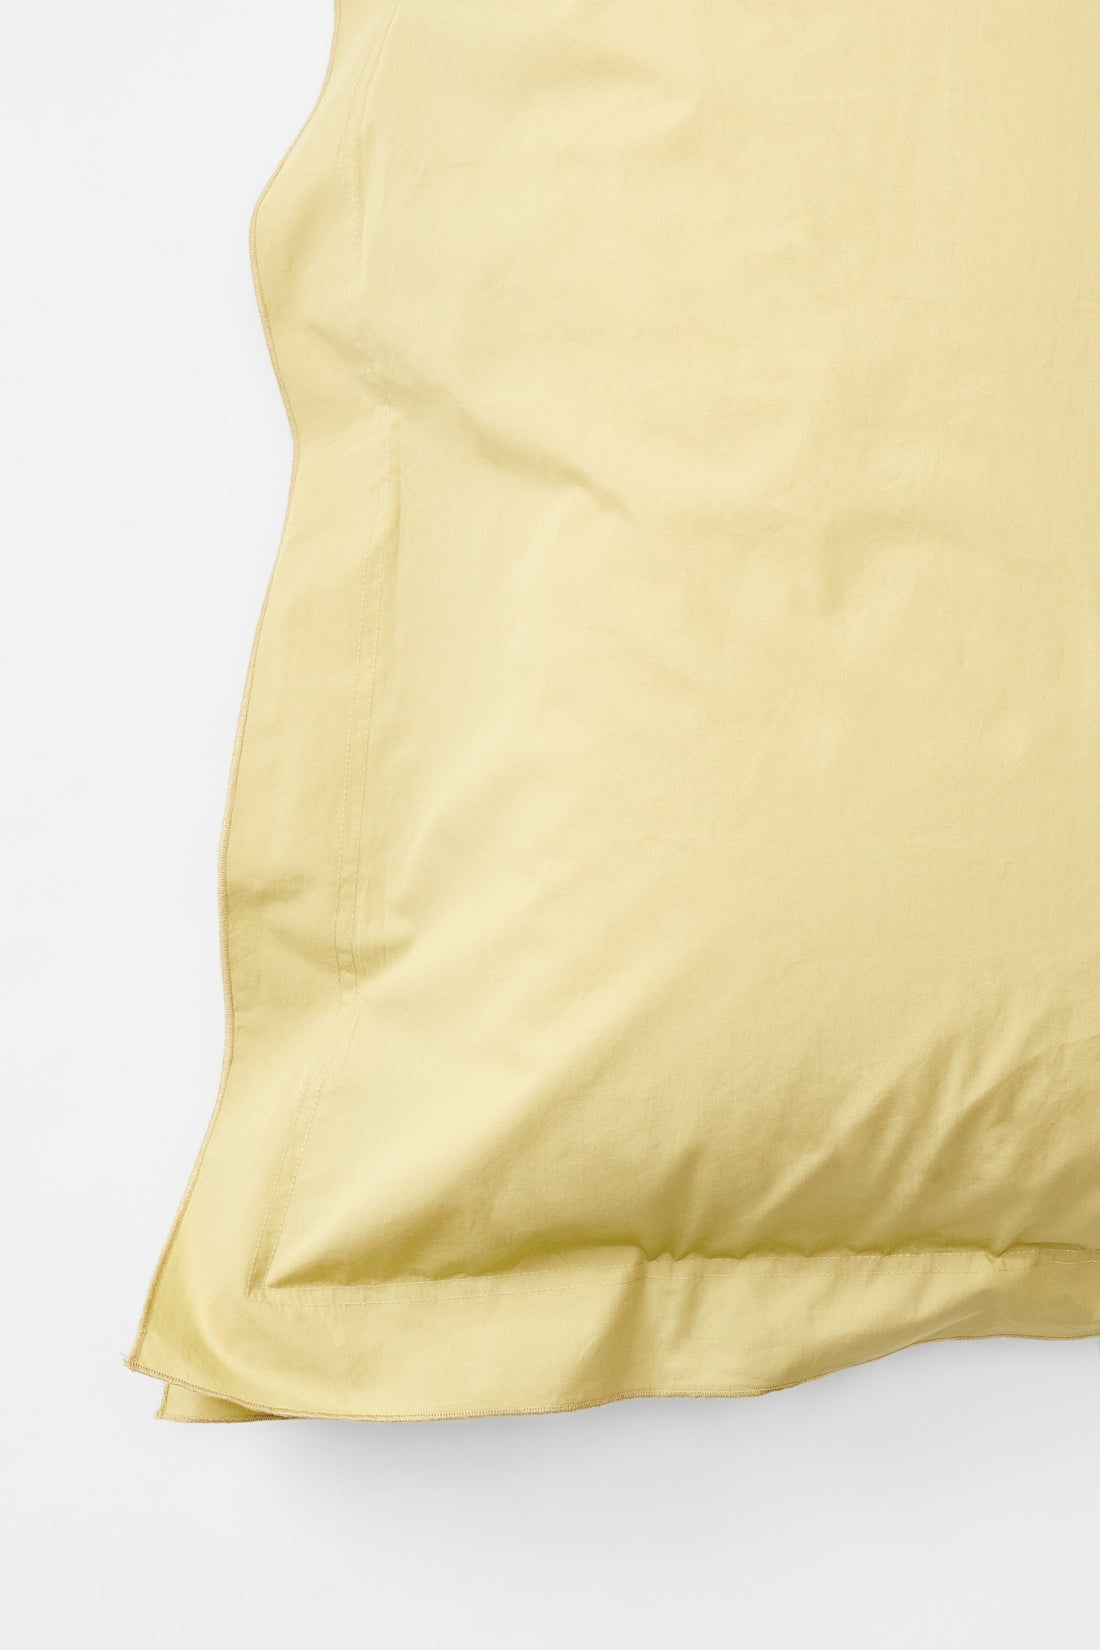 Mono Organic Cotton Percale Pillow Pair - Maize Pillows in King Pillow